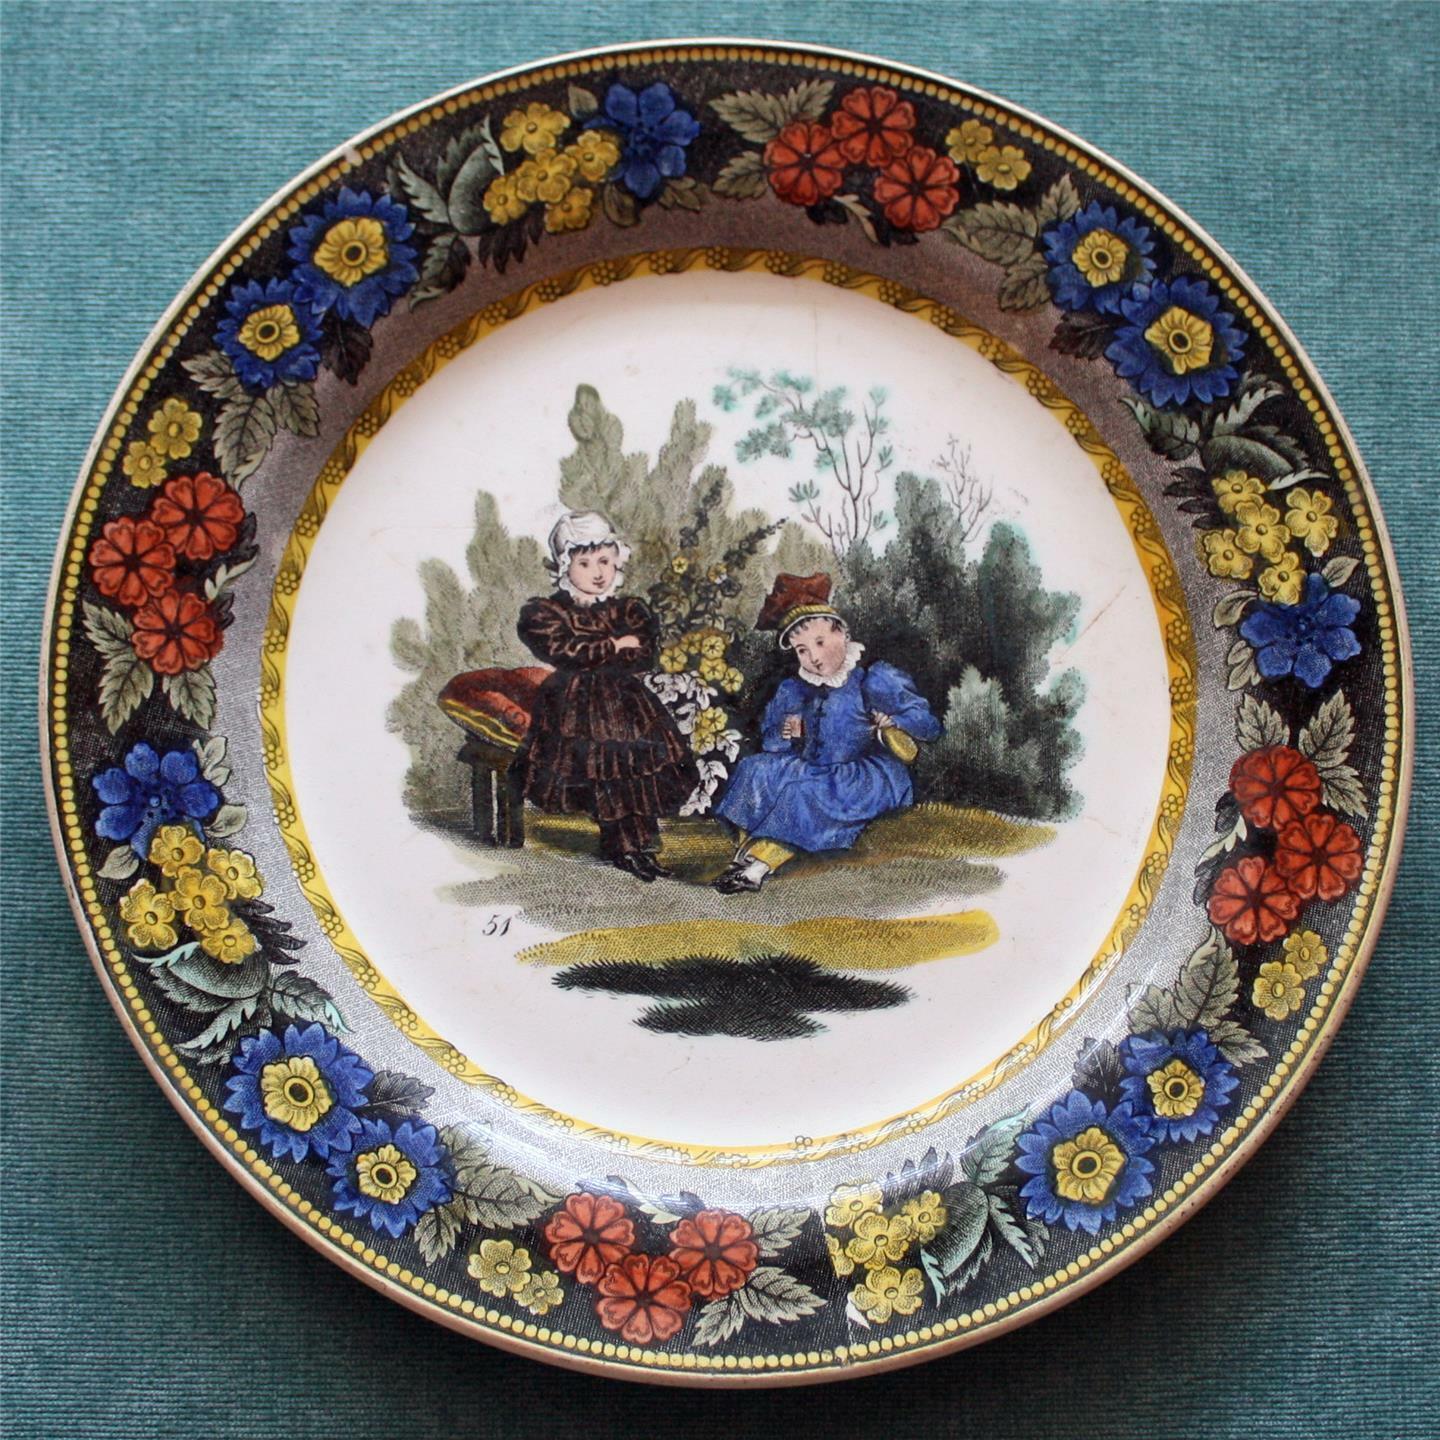 c. 1830 Antique French Faience Creil Plate, 2 Children